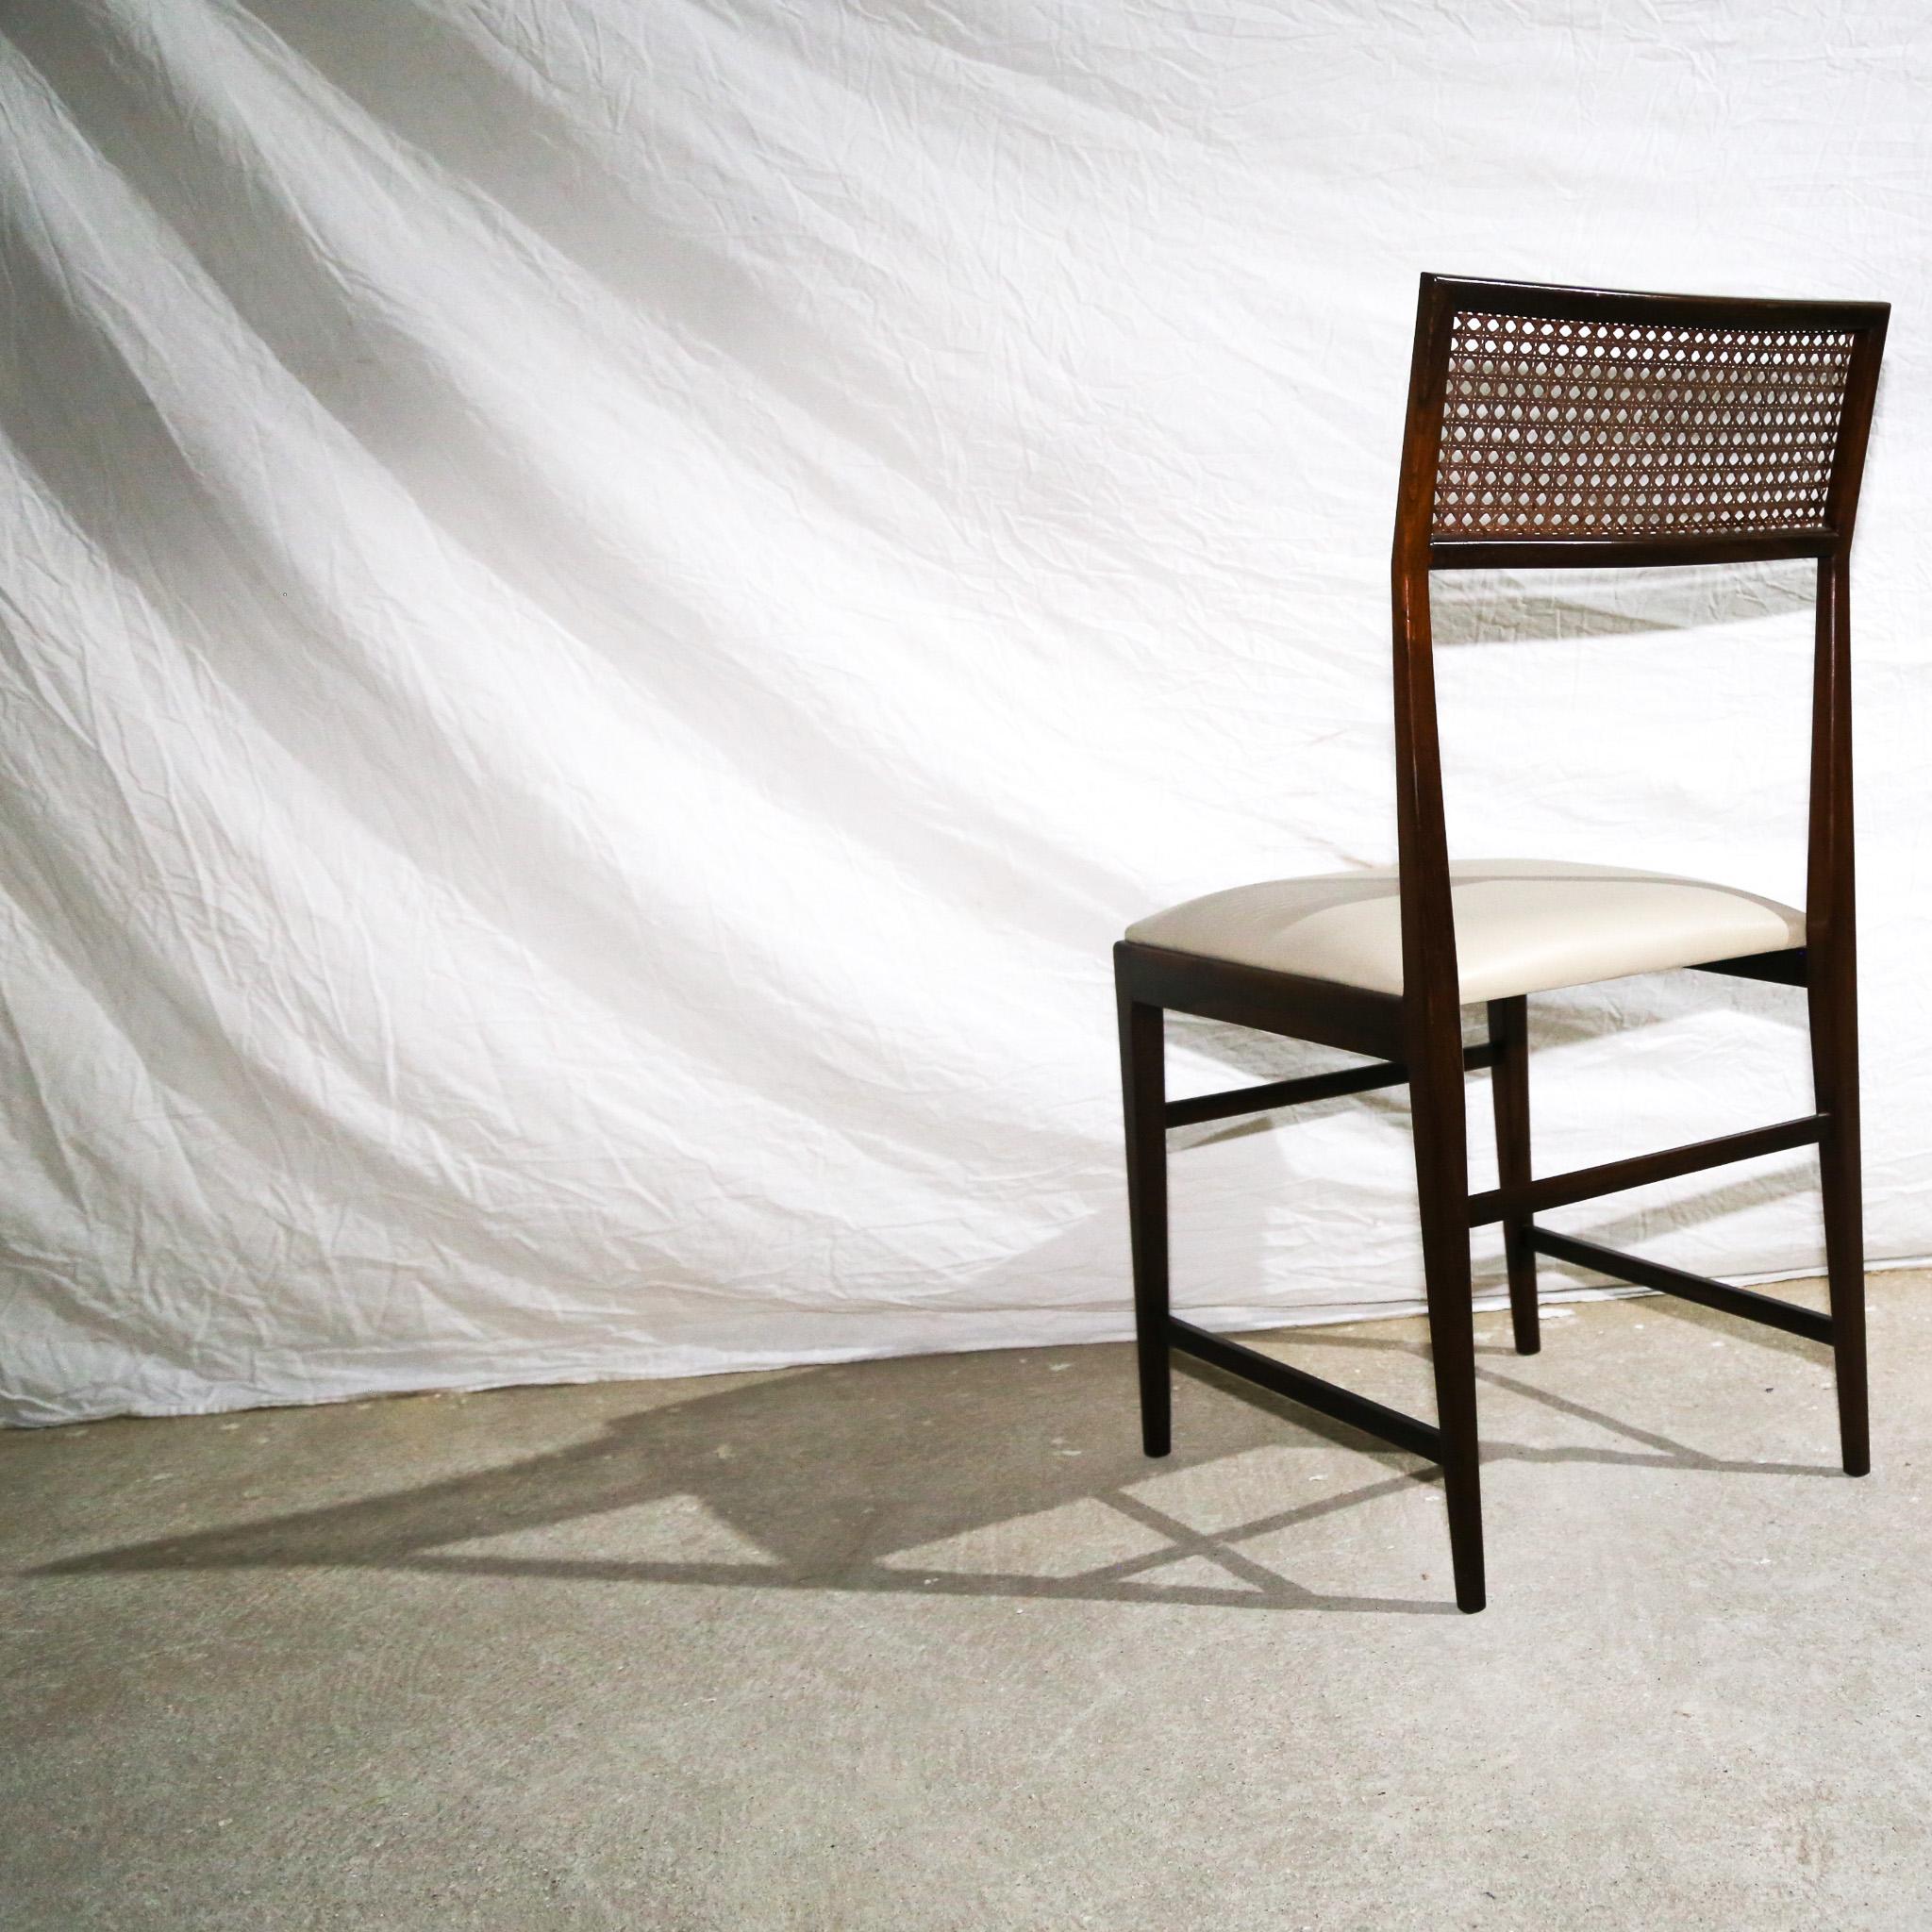 Brazilian Modern 4 Chair Set in Hardwood, Cane, Leather, Joaquim Tenreiro 1950s For Sale 10